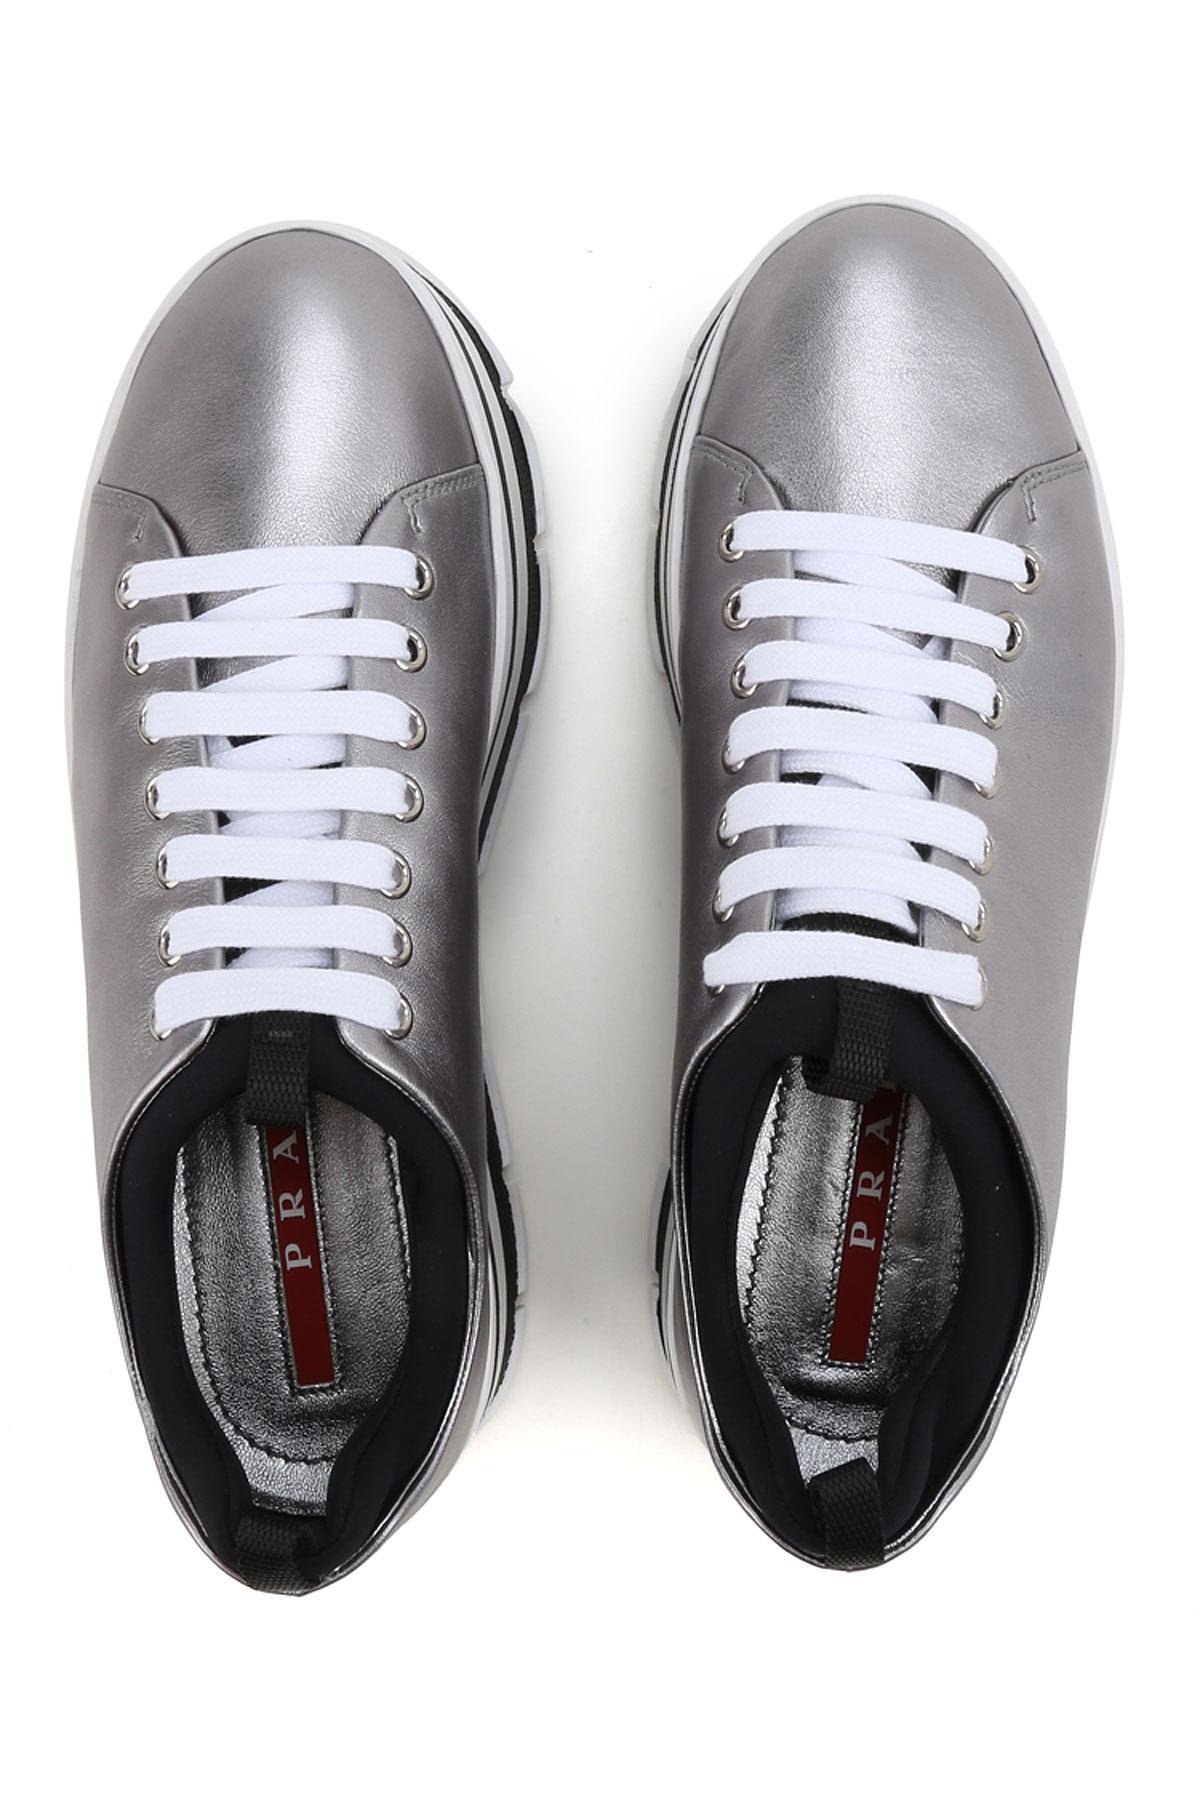 Prada Sneakers For Women On Sale In Outlet in Silver (Metallic) - Lyst